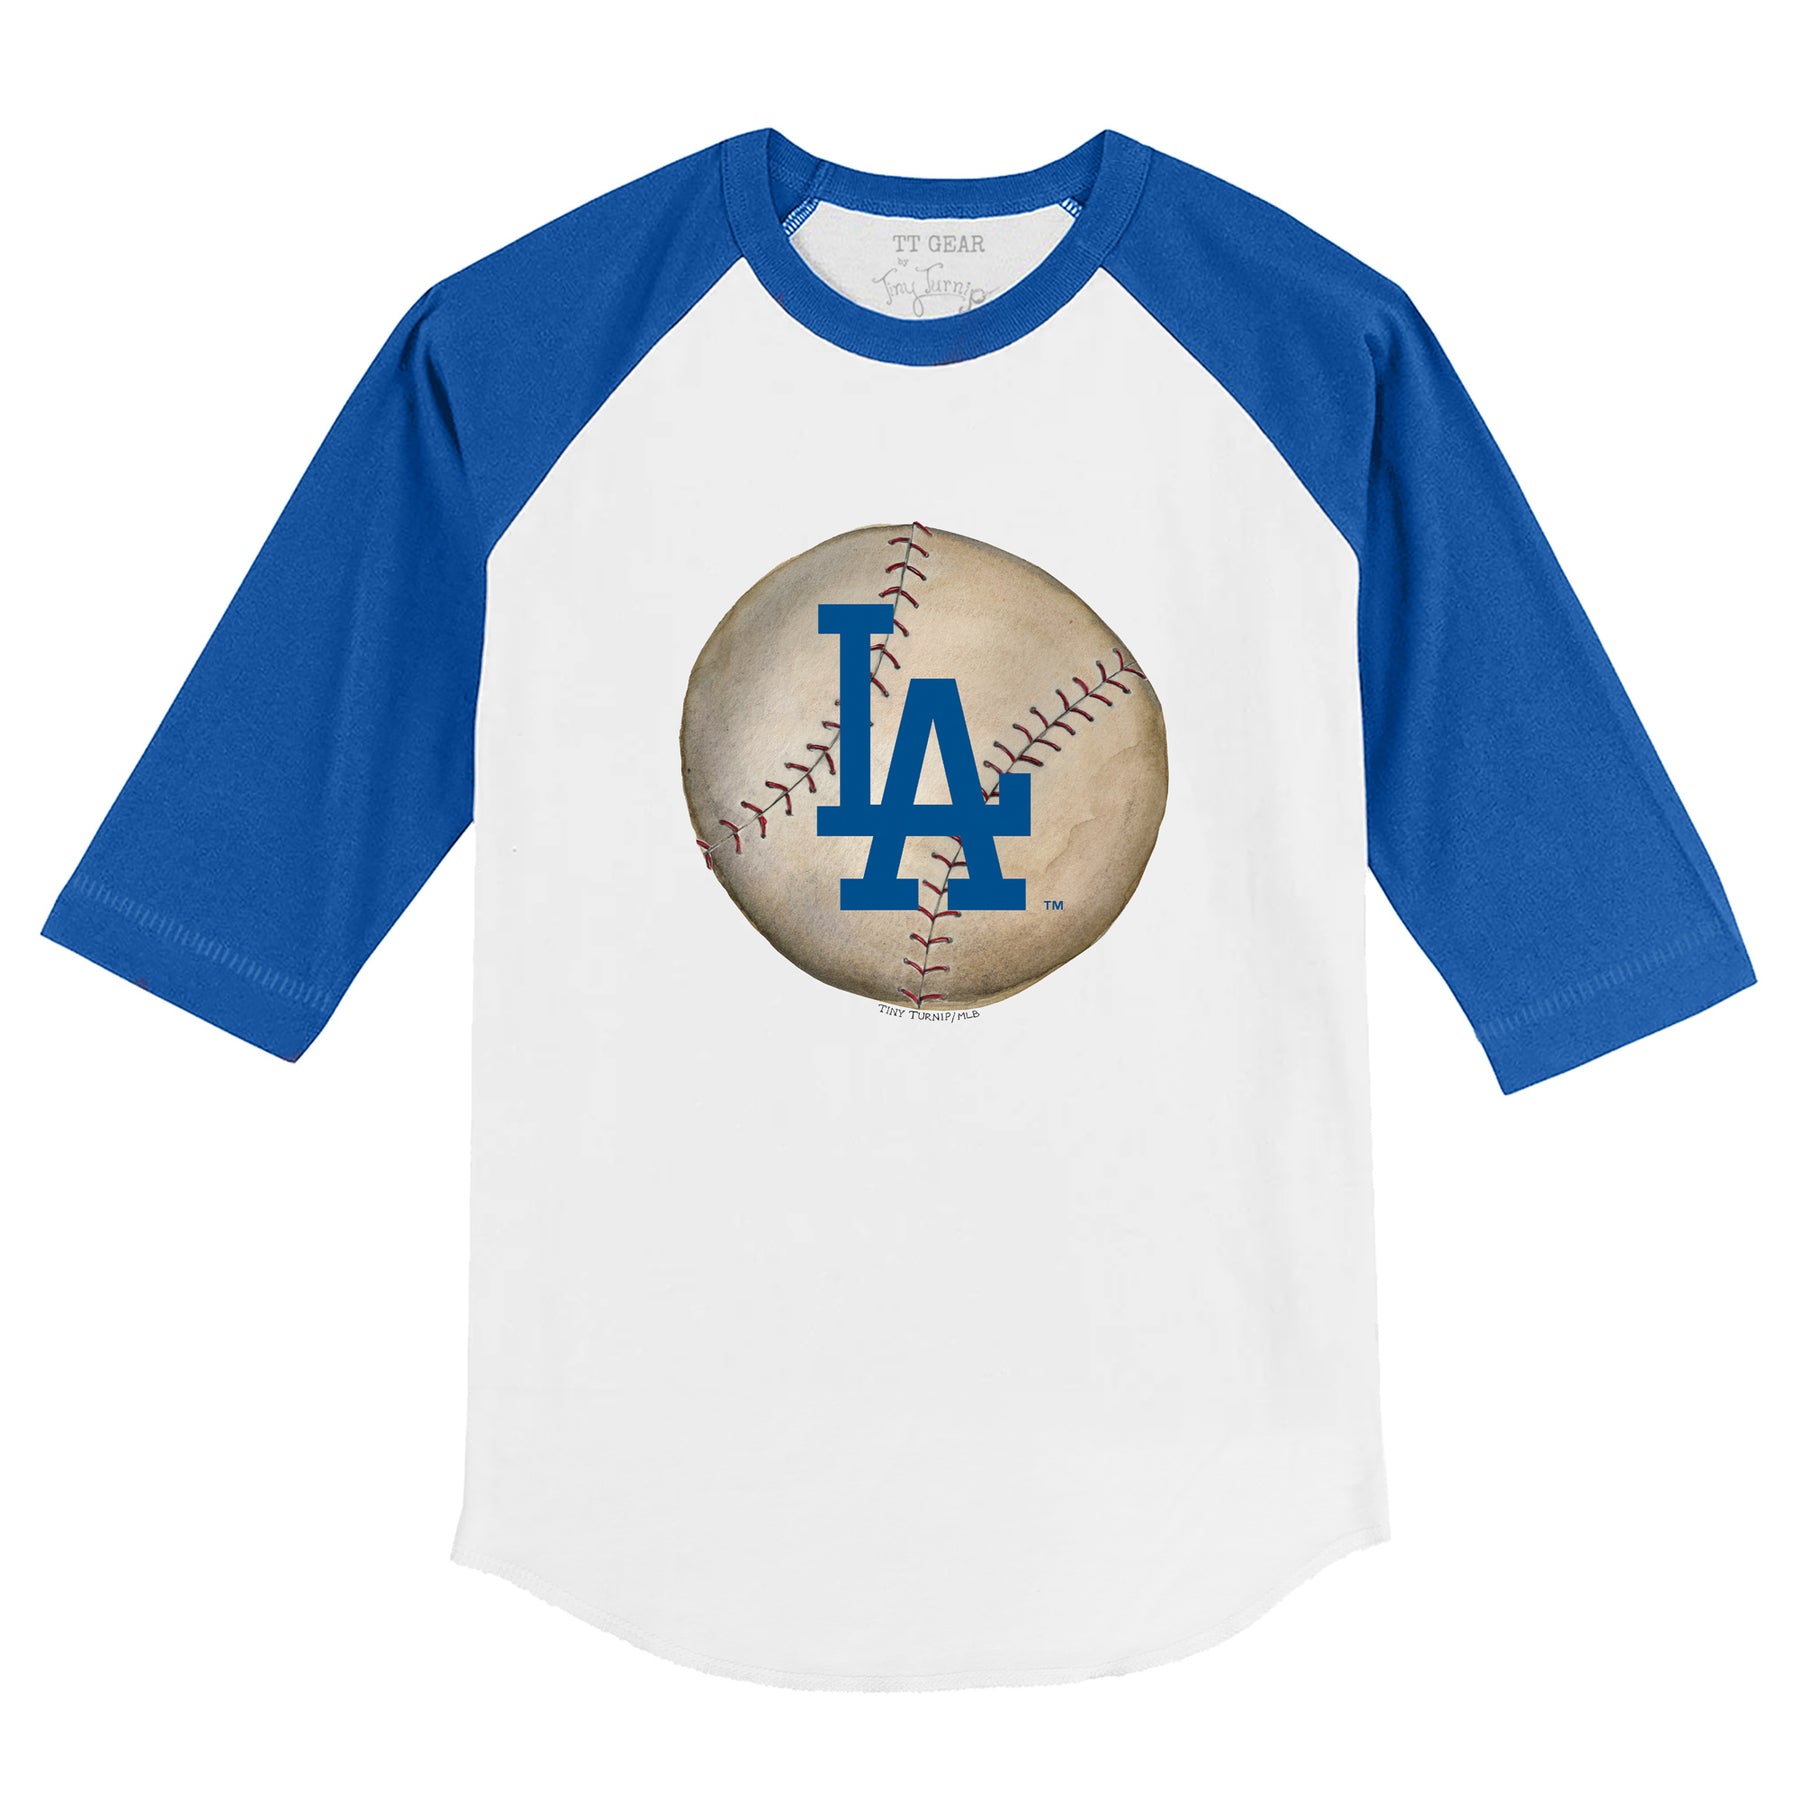 Dodgers Kid's Team Jersey (Size 2T-4T)